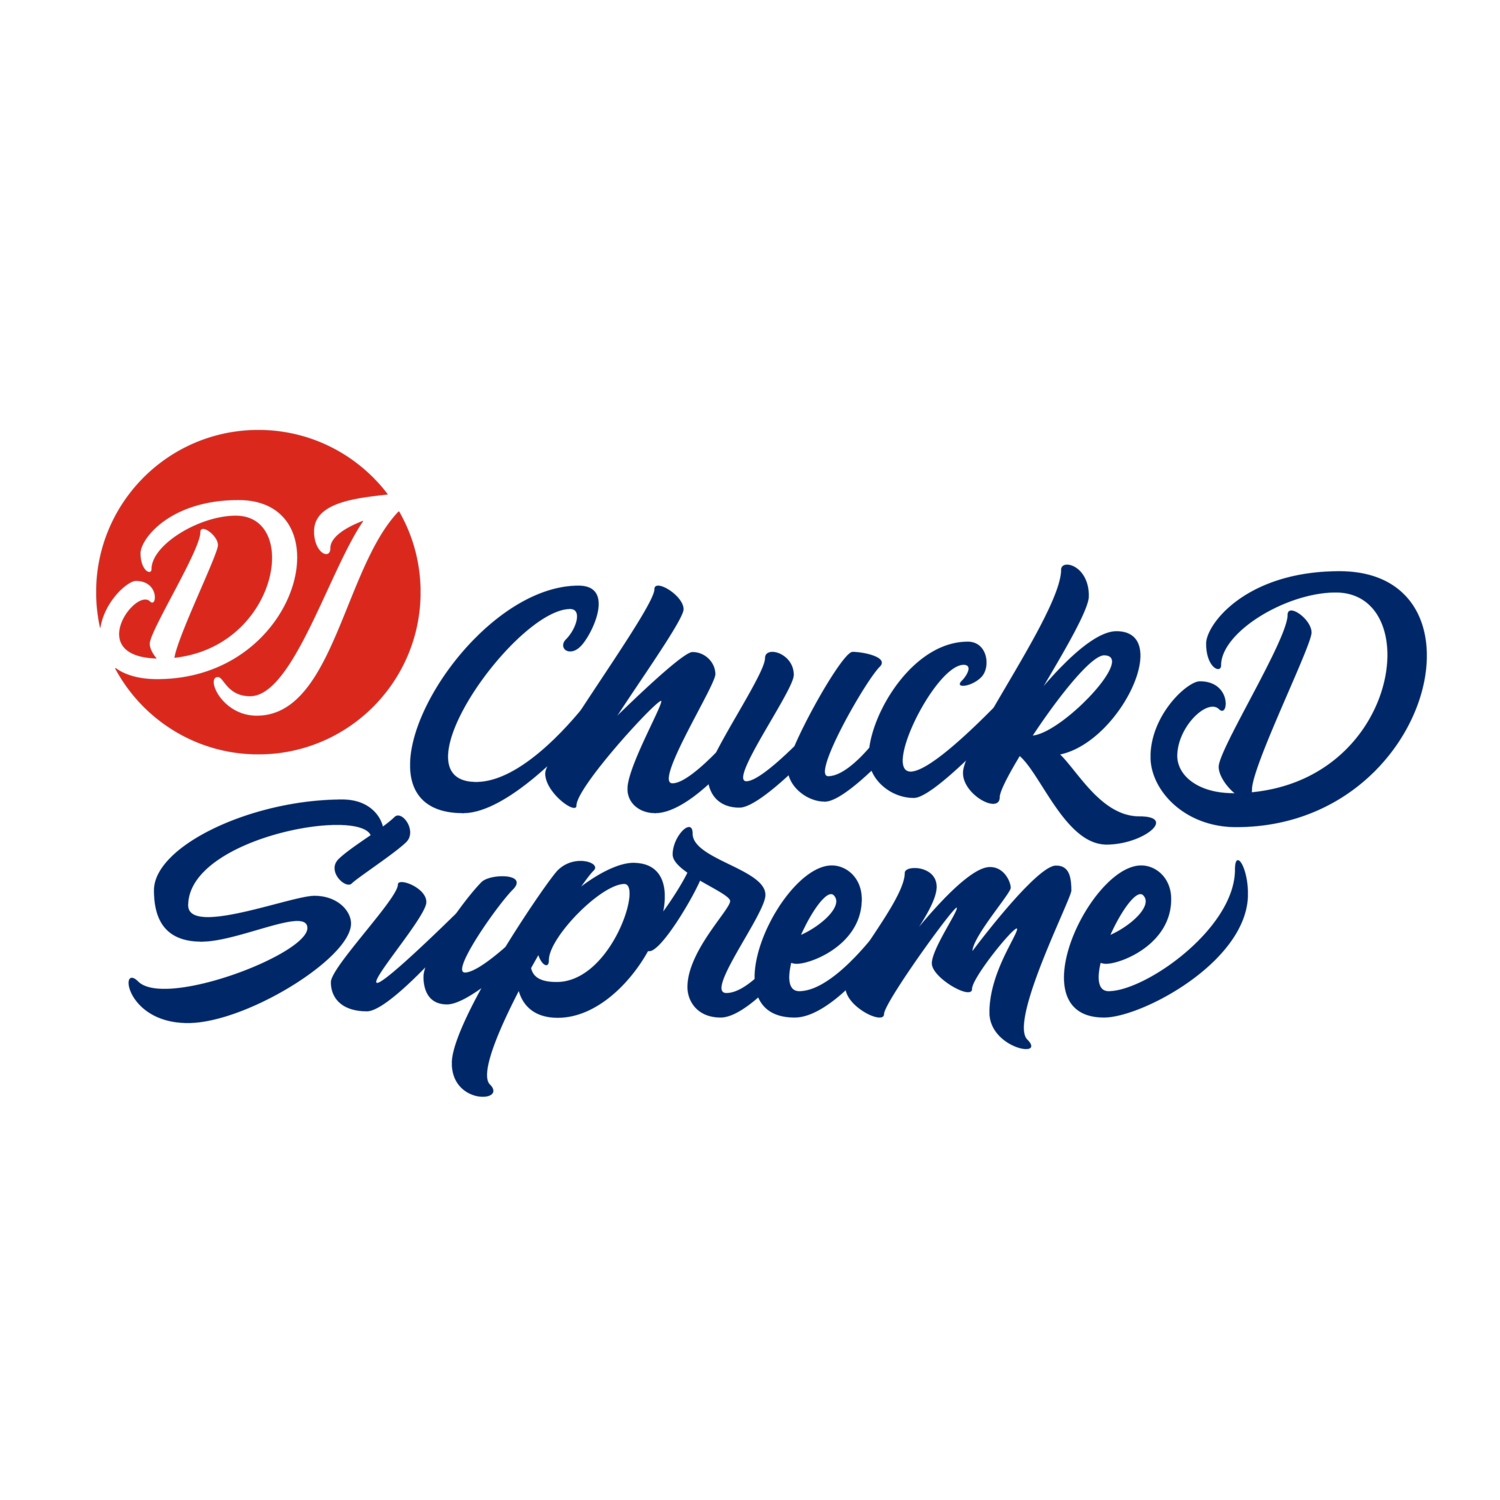 DJ Chuck D Supreme